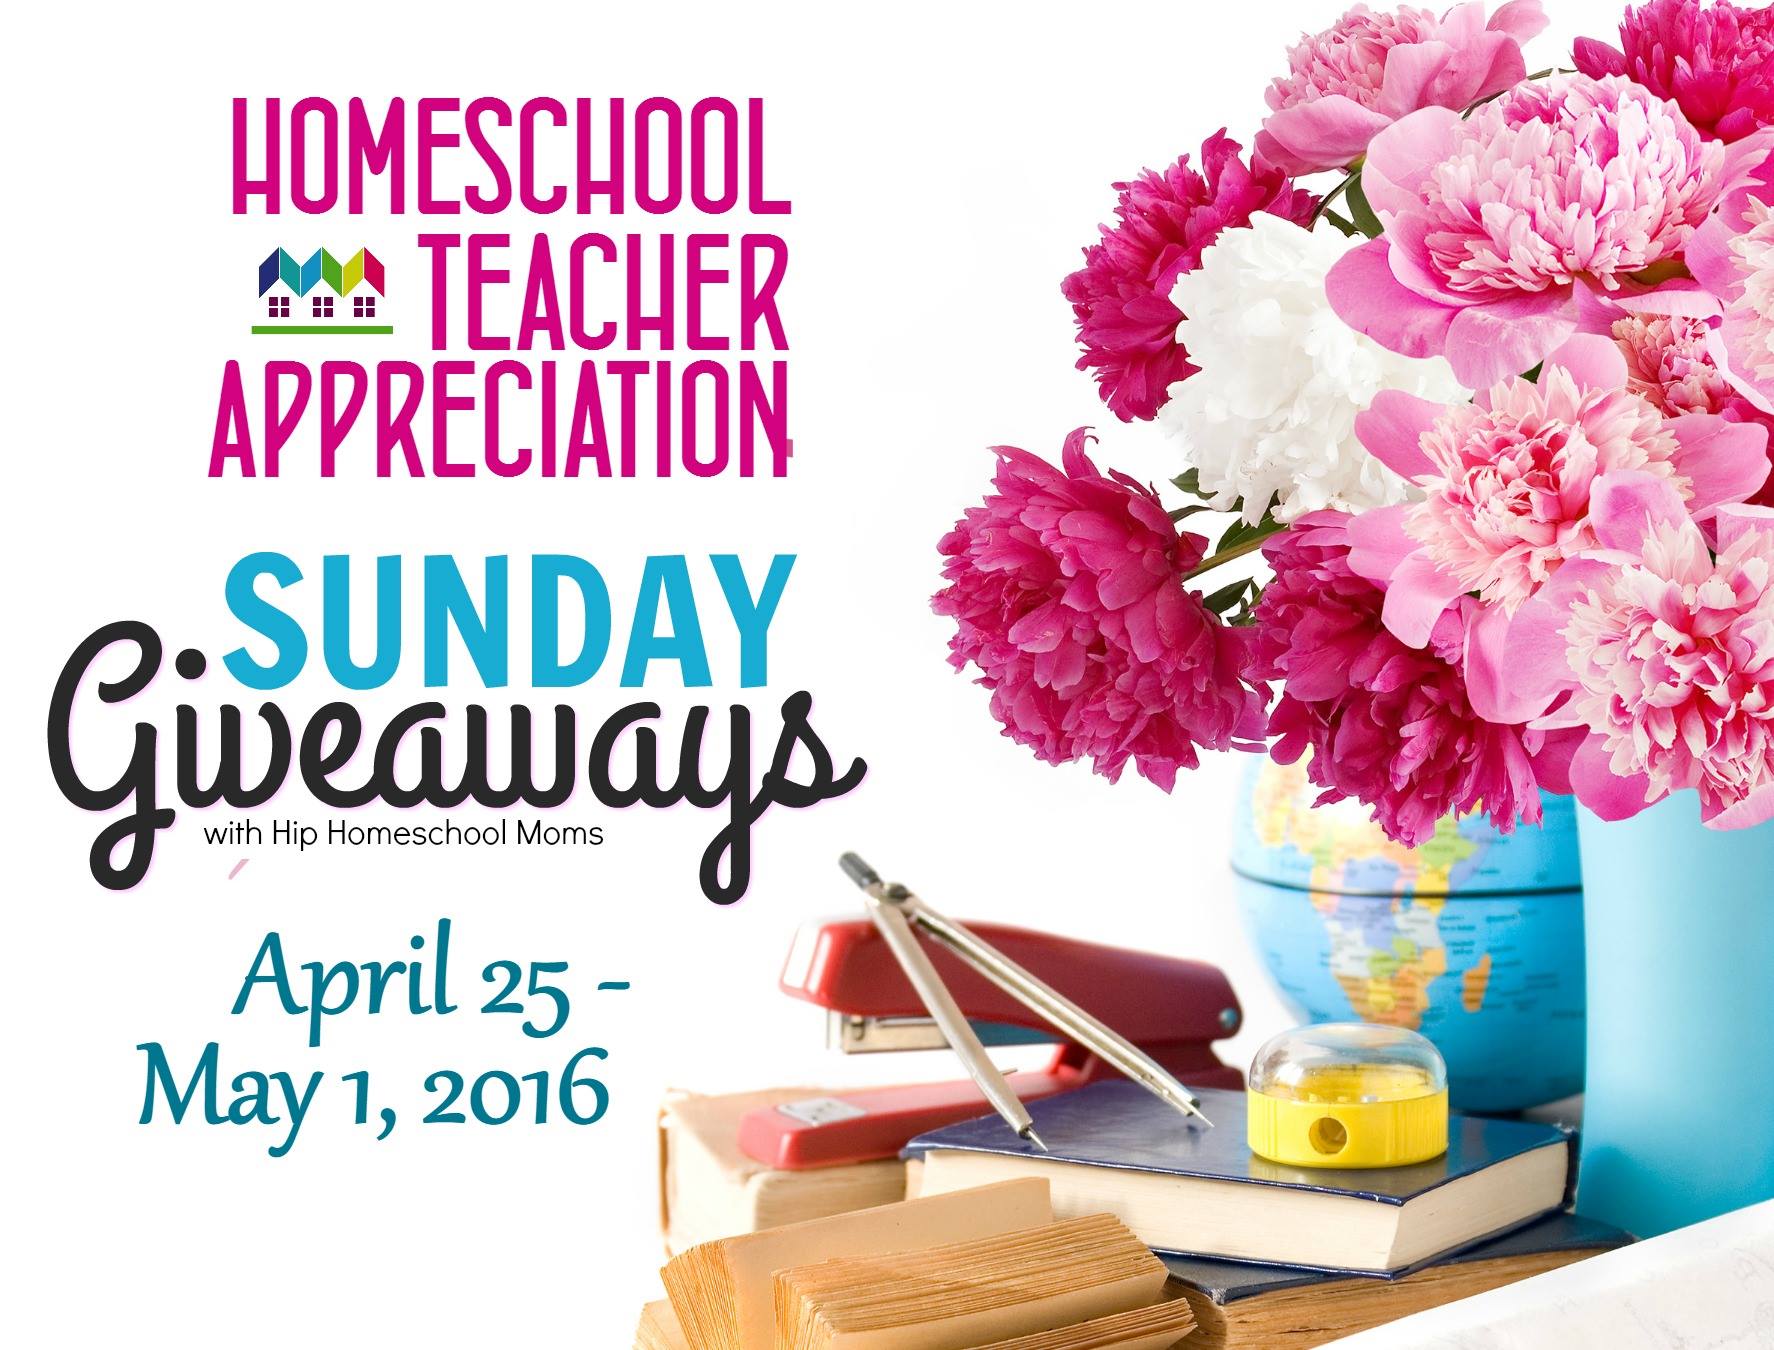 Sunday’s Giveaways for Homeschool Teacher Appreciation Week